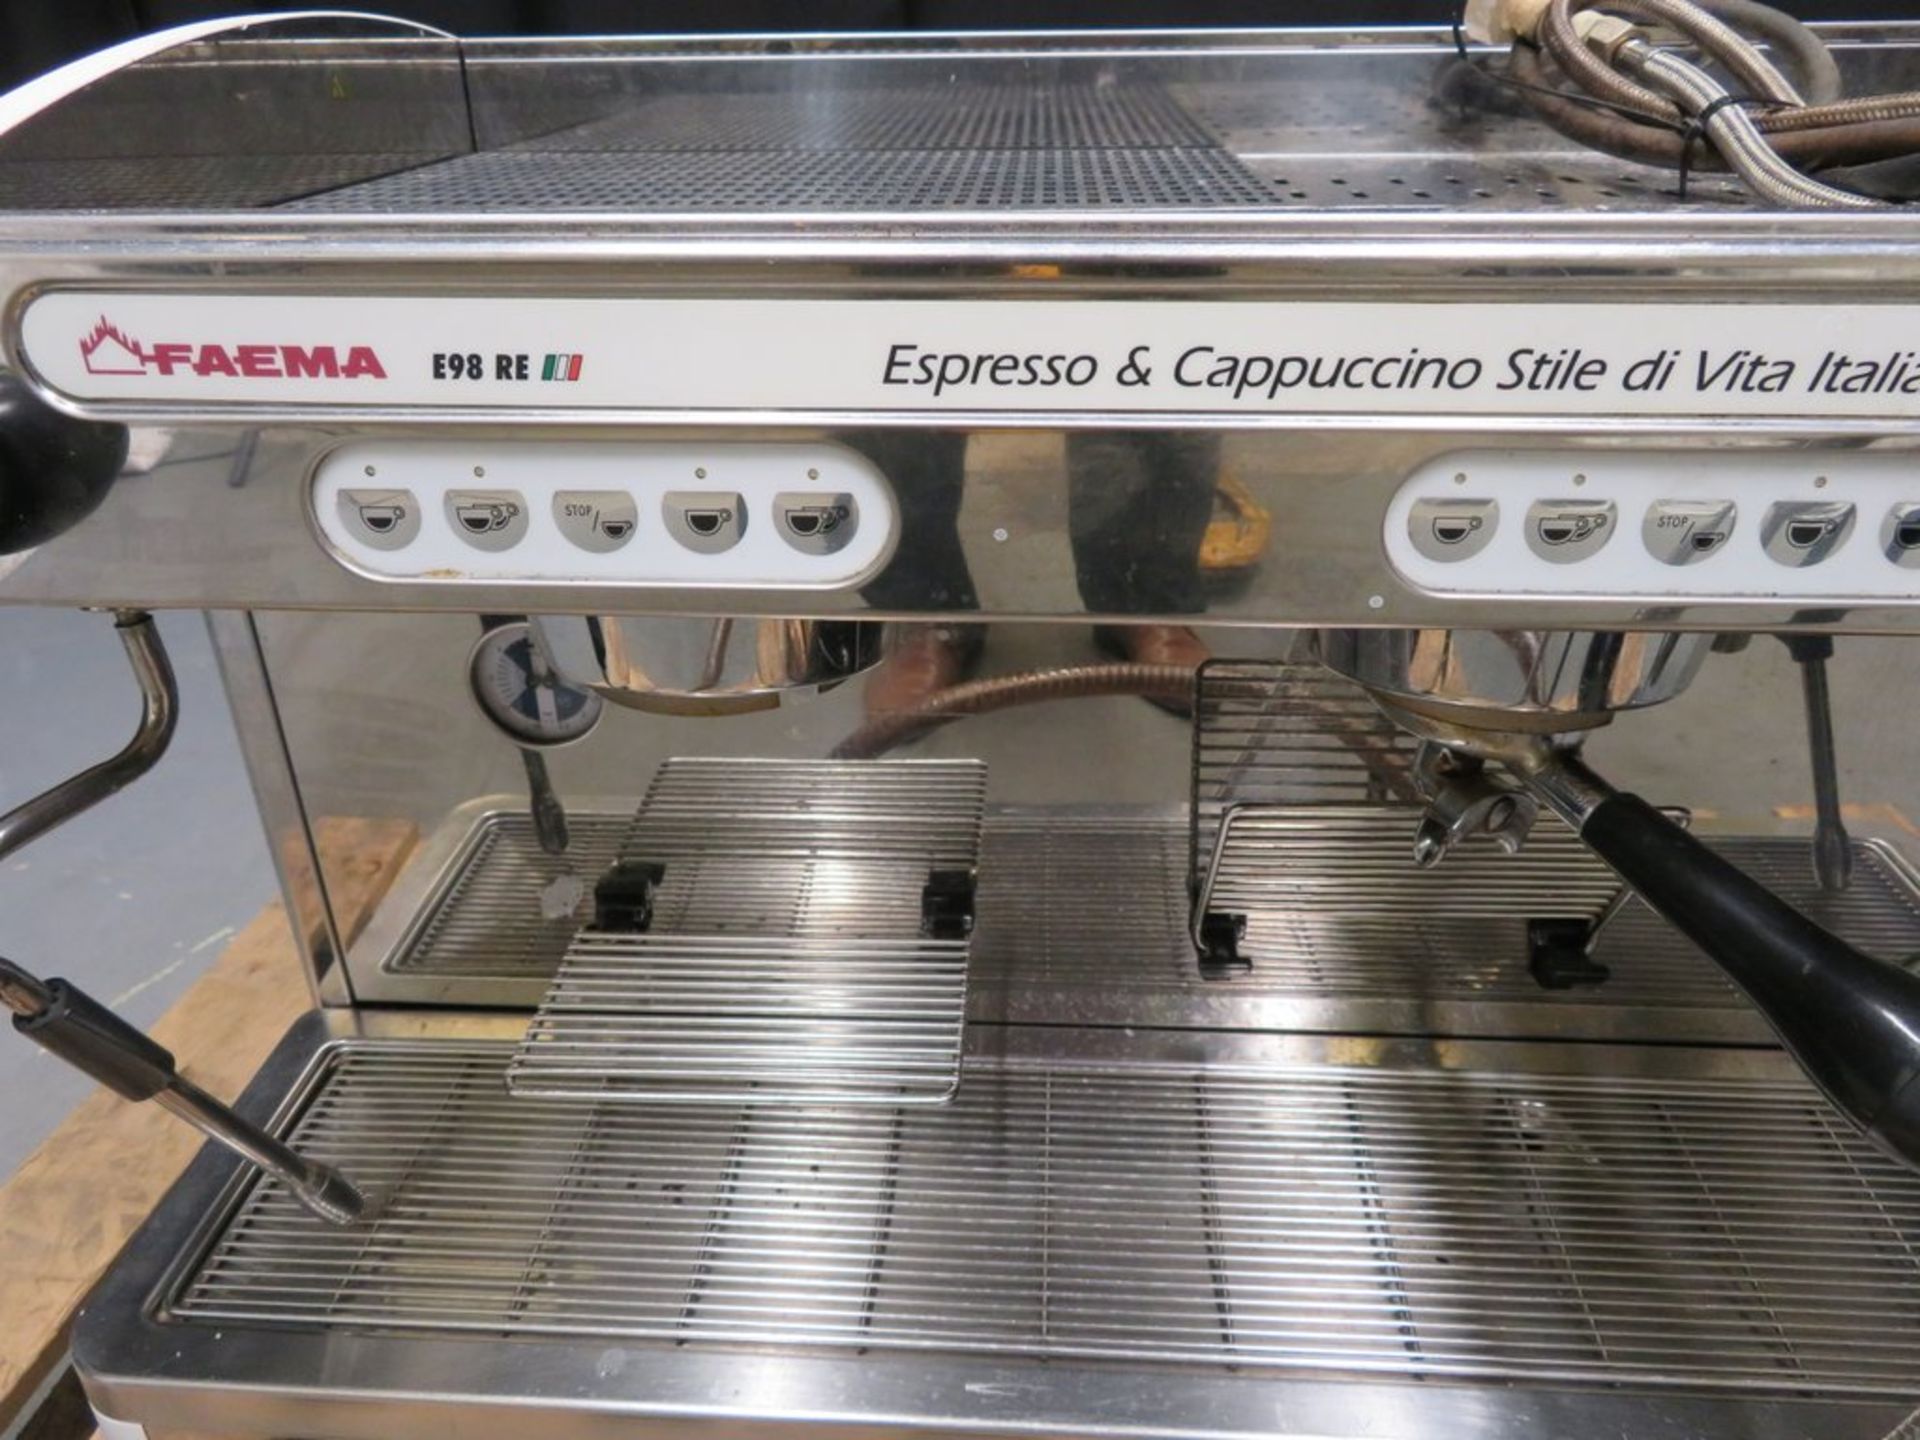 Faema E98 RE coffee machine, 1 phase electric - Image 5 of 9